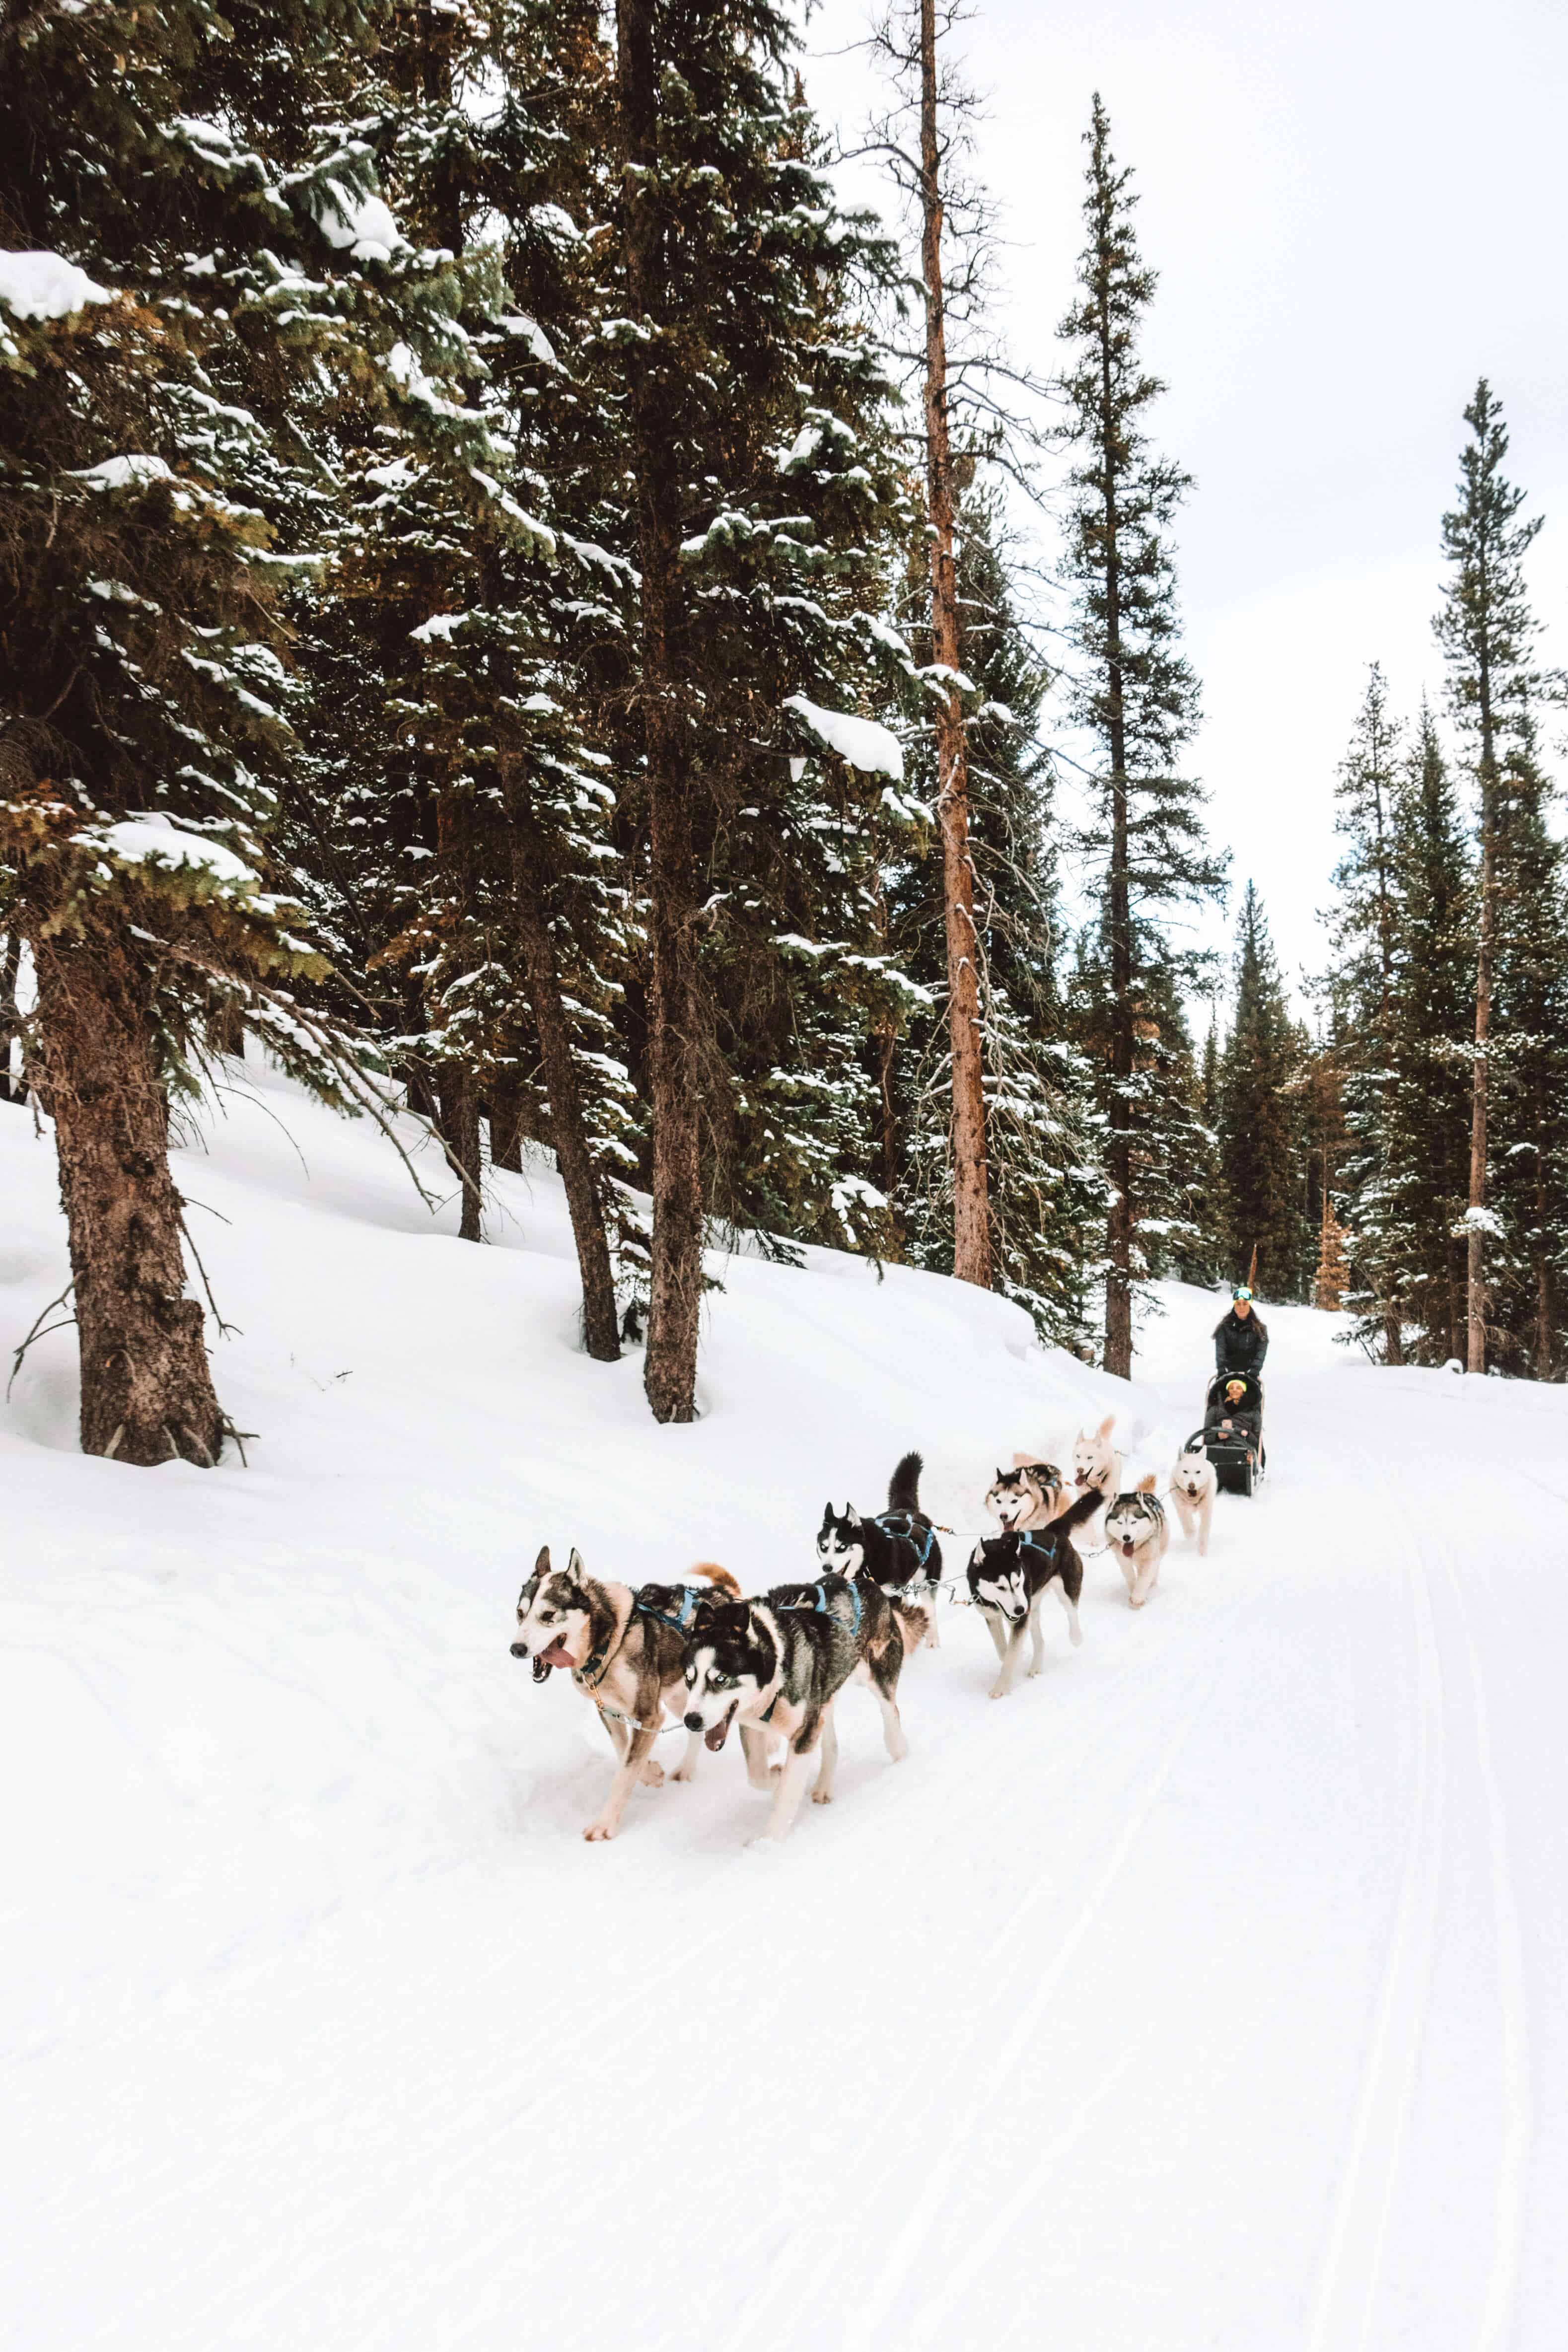 Some of the Siberian huskies on the dog sledding team in Breckenridge, Colorado